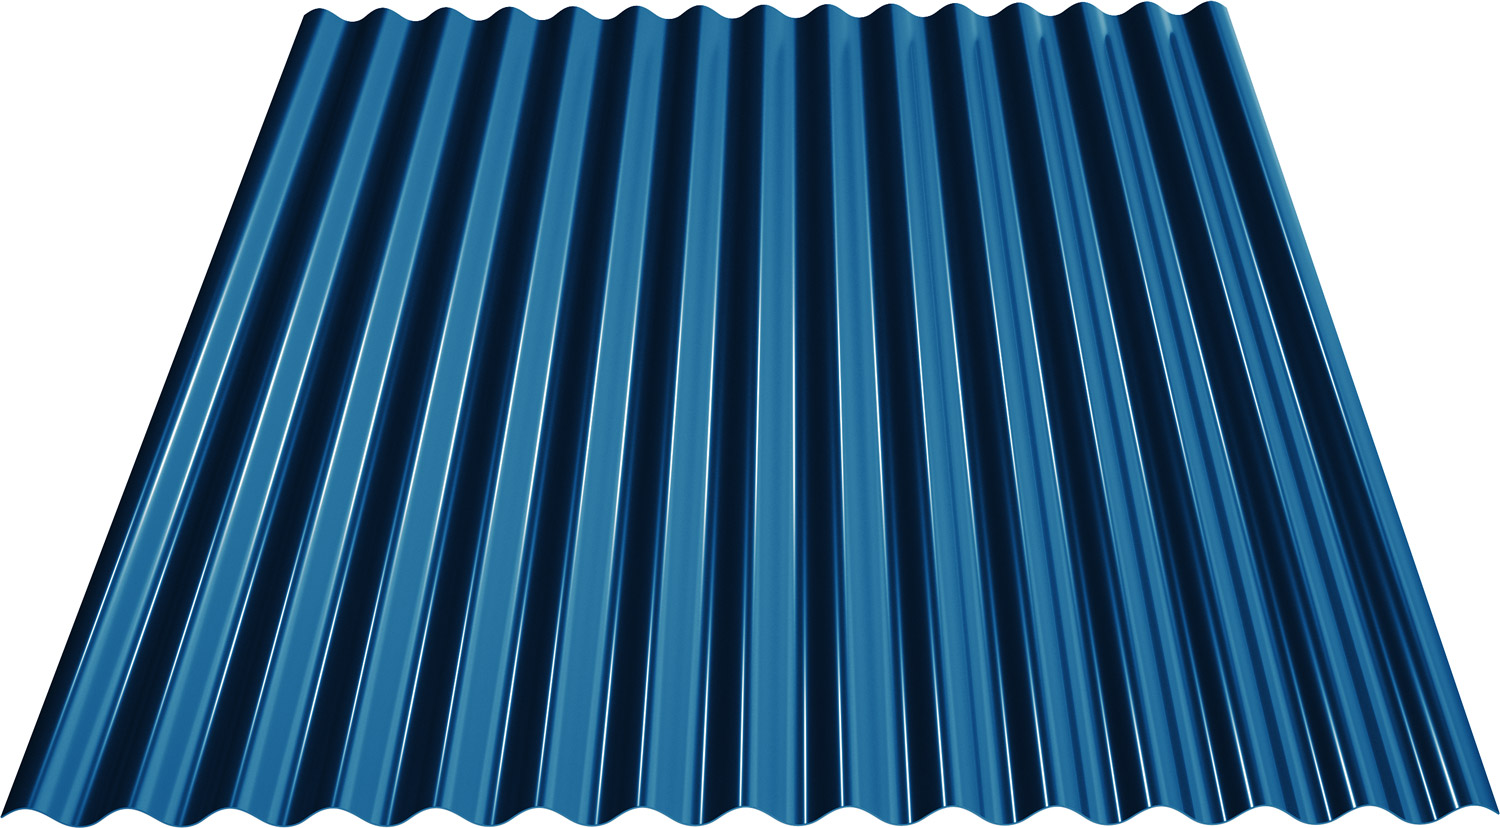 Tigla metalica - Tabla Sinus BILKA model S18 Sinus, 0,5 mm aspect Lucios, culoare RAL 5010 (Albastru), https:magazin.crisgroup.ro